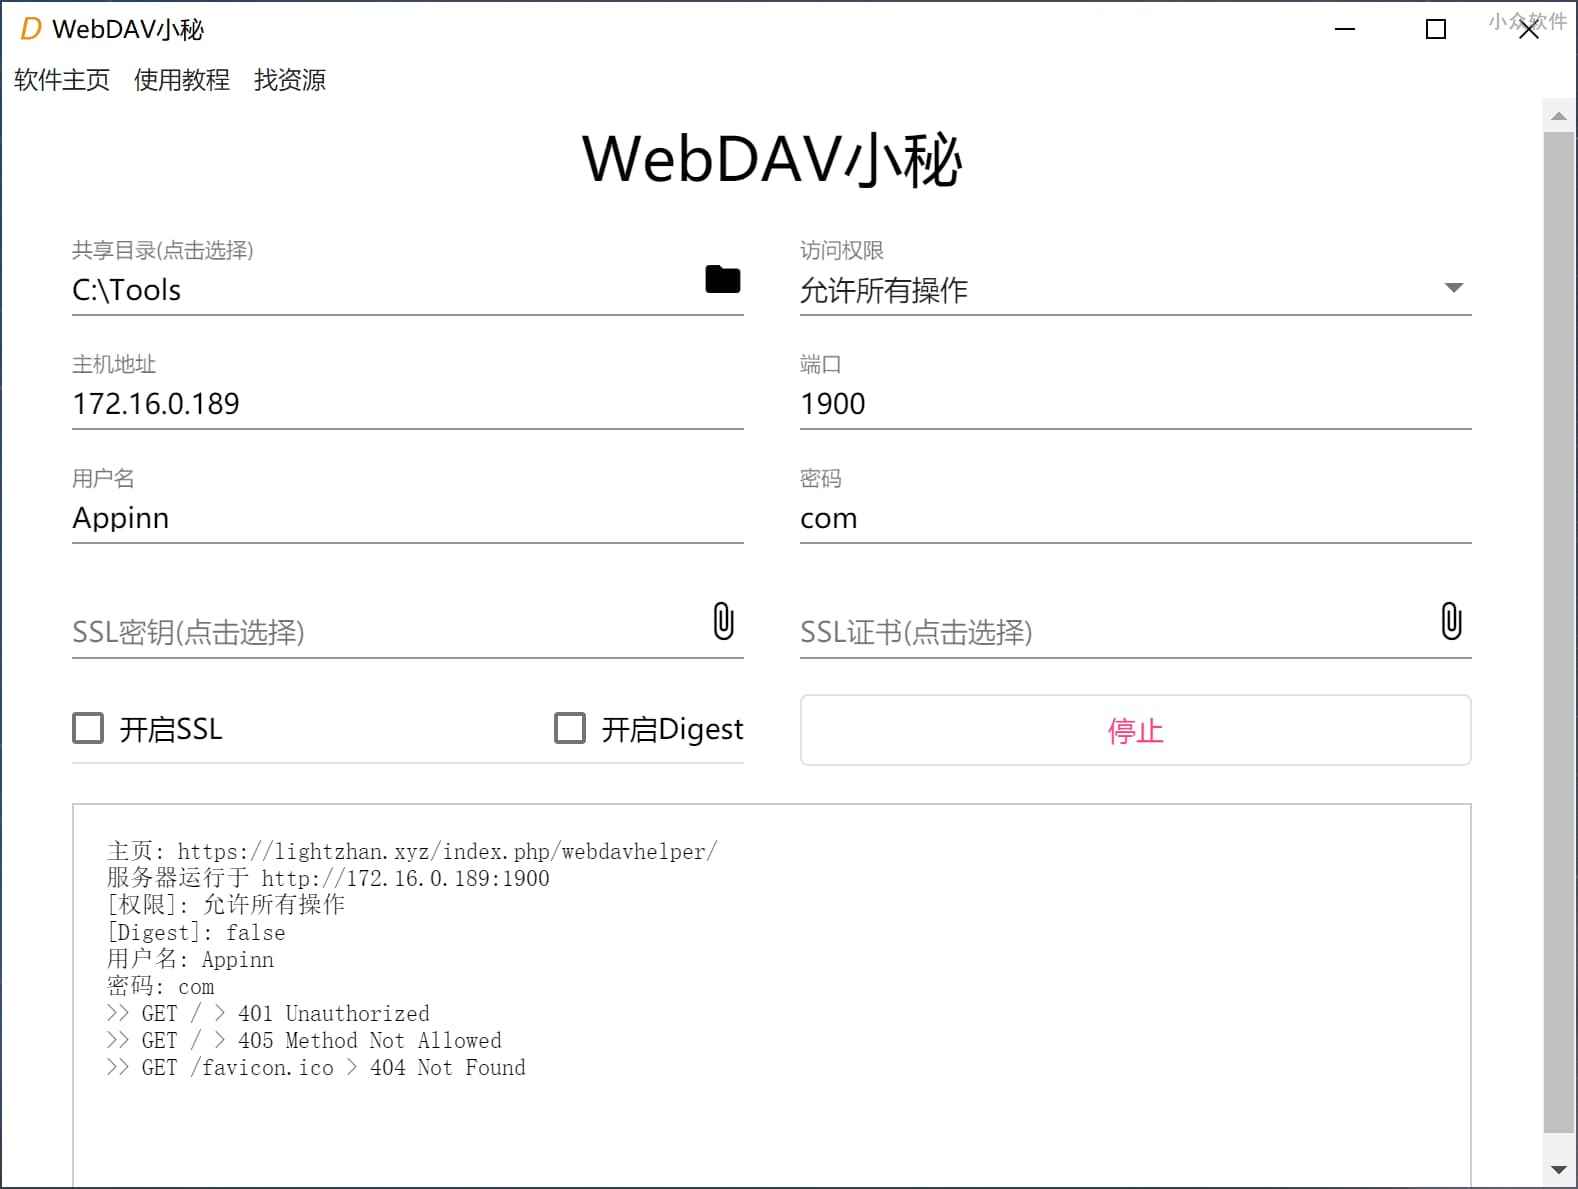 WebDAV小秘 - 在 PC 上 1 键开启 WebDAV 服务器